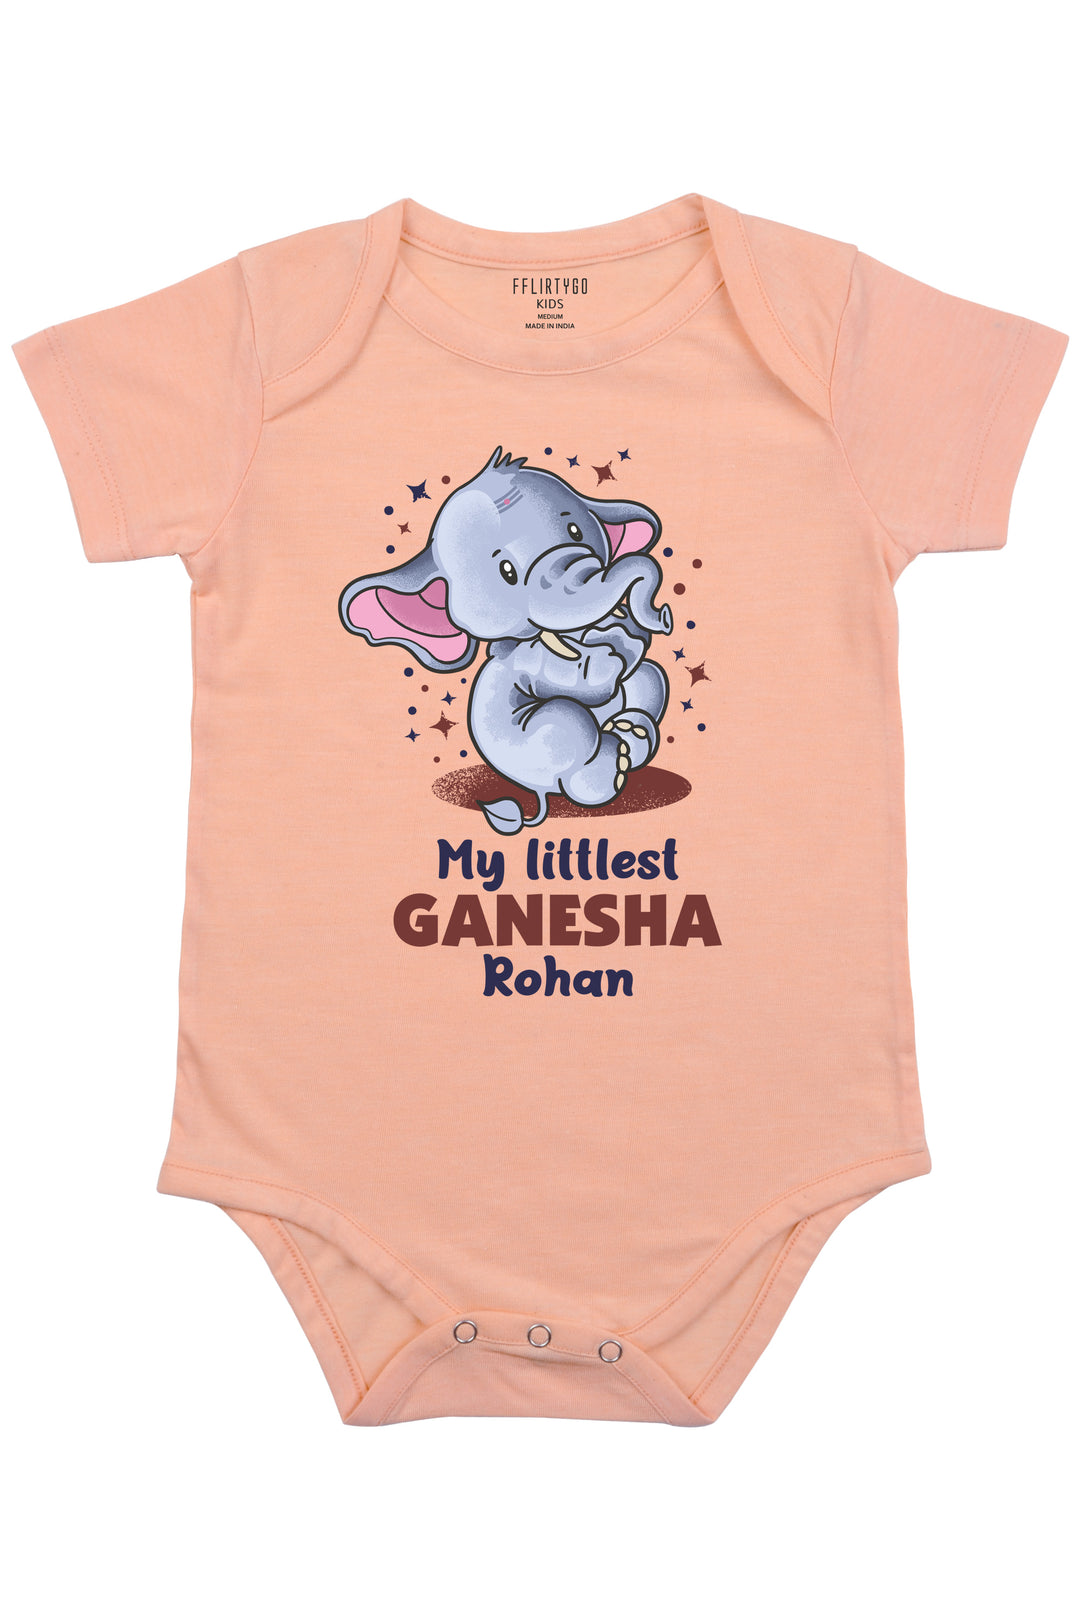 My Littlest Ganesha Baby Romper | Onesies w/ Custom Name